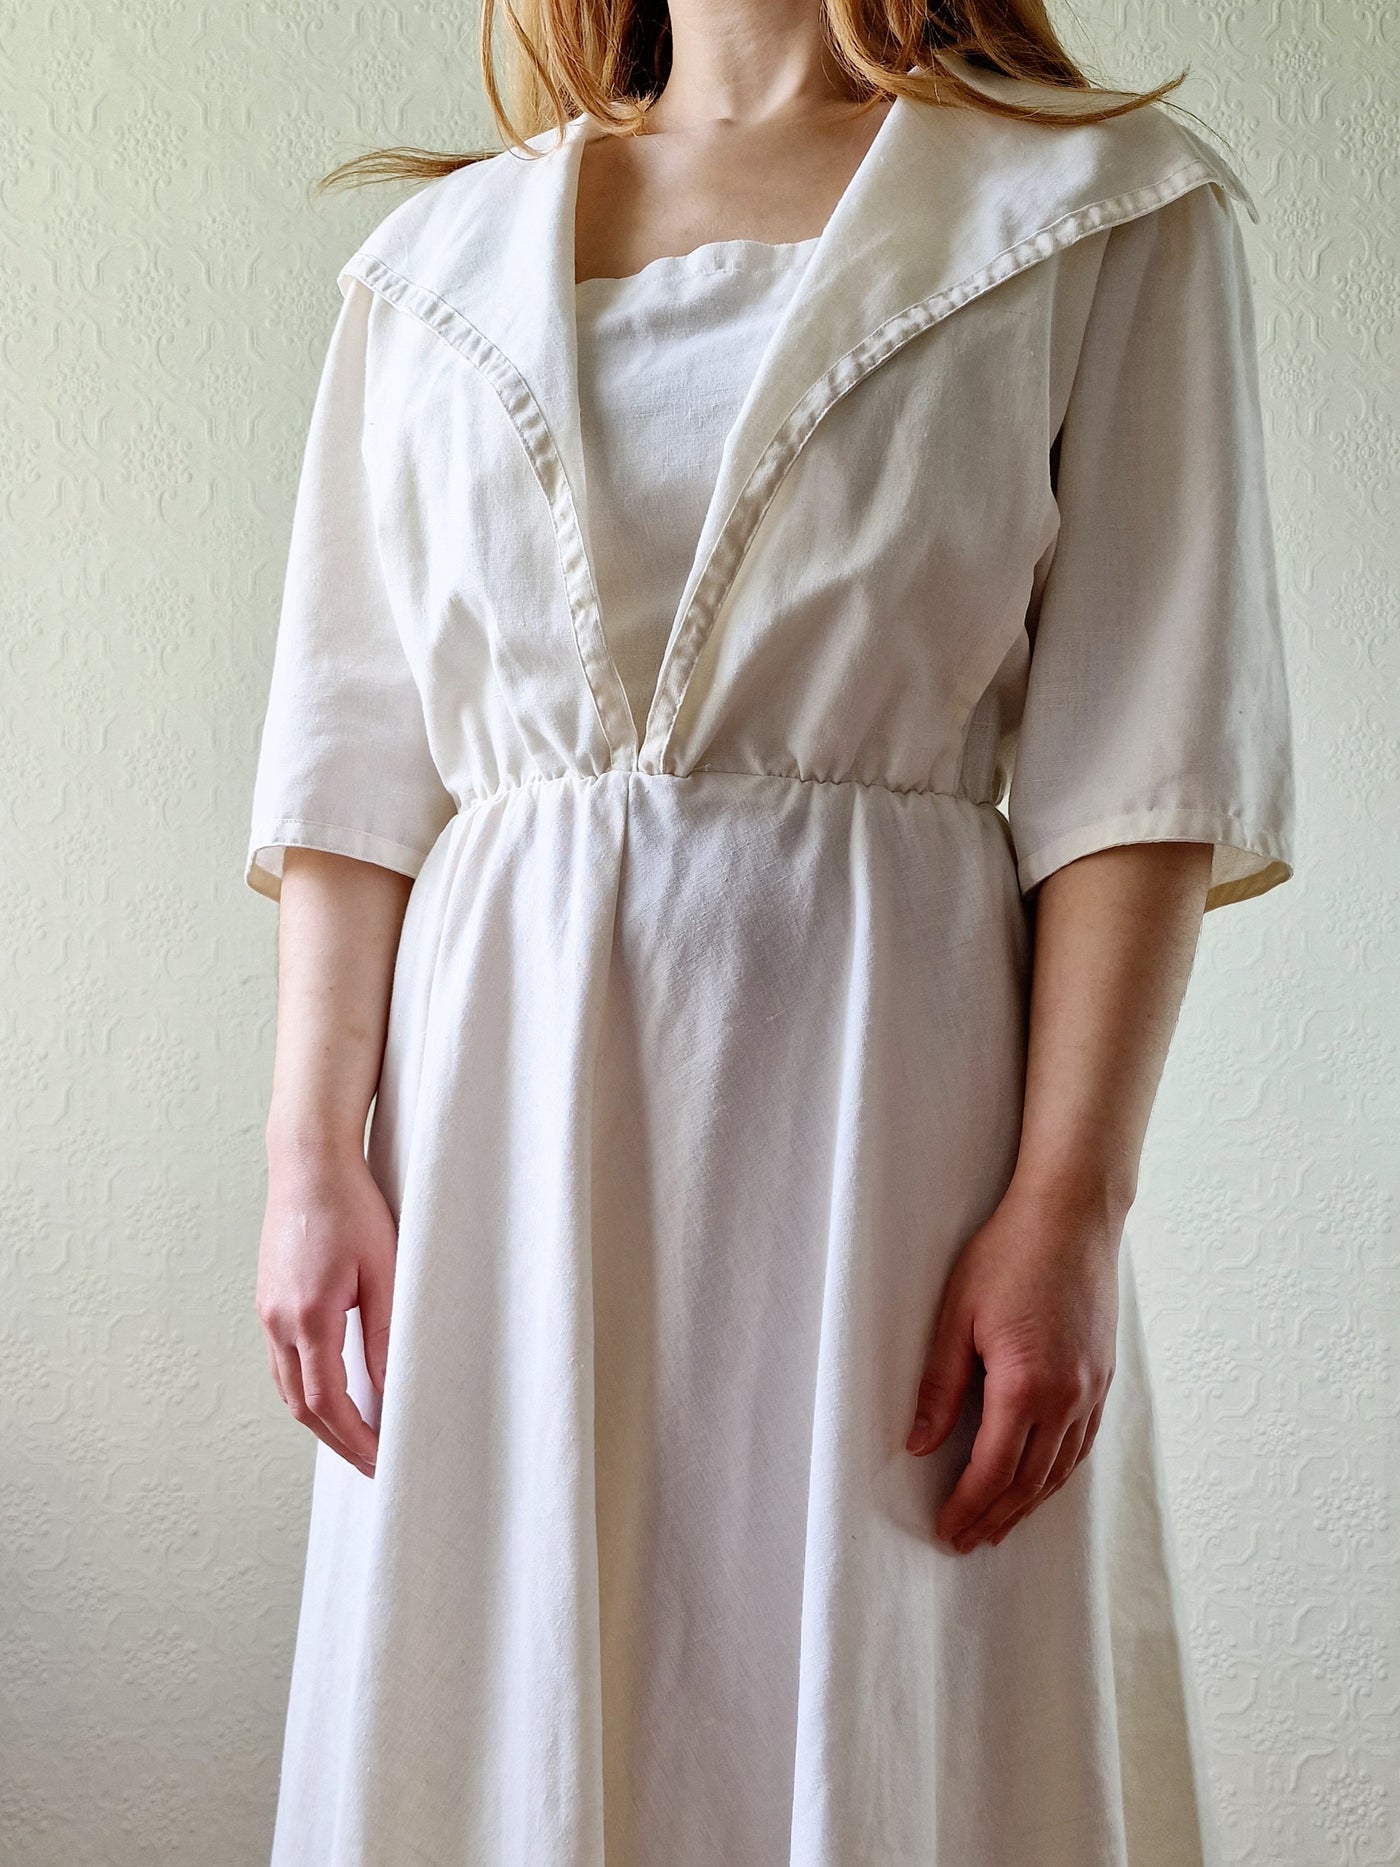 Vintage Cream Short Sleeve Dress with Sailor Collar - M/L